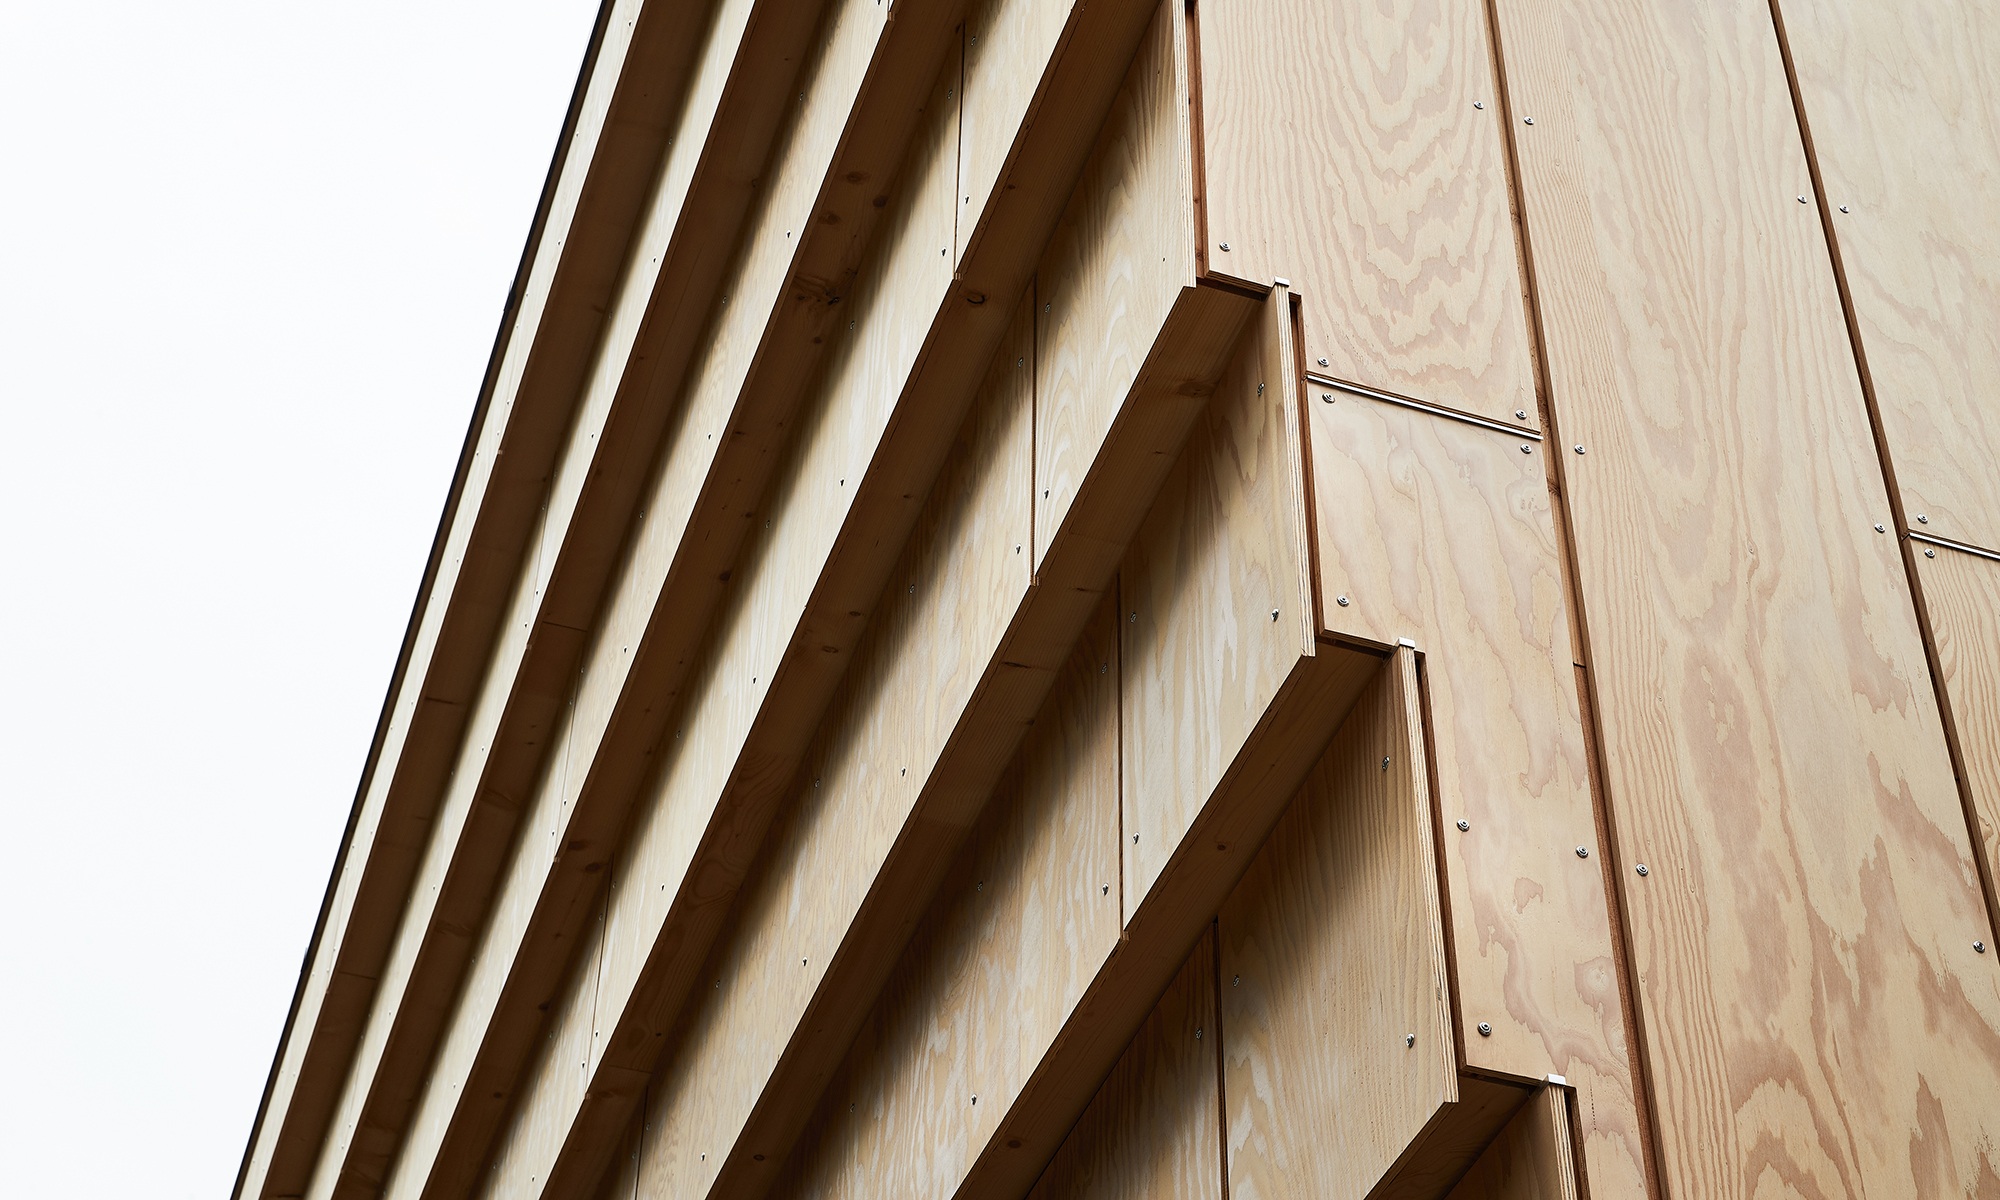 Stülpschalung der Holzfassade in Detailansicht